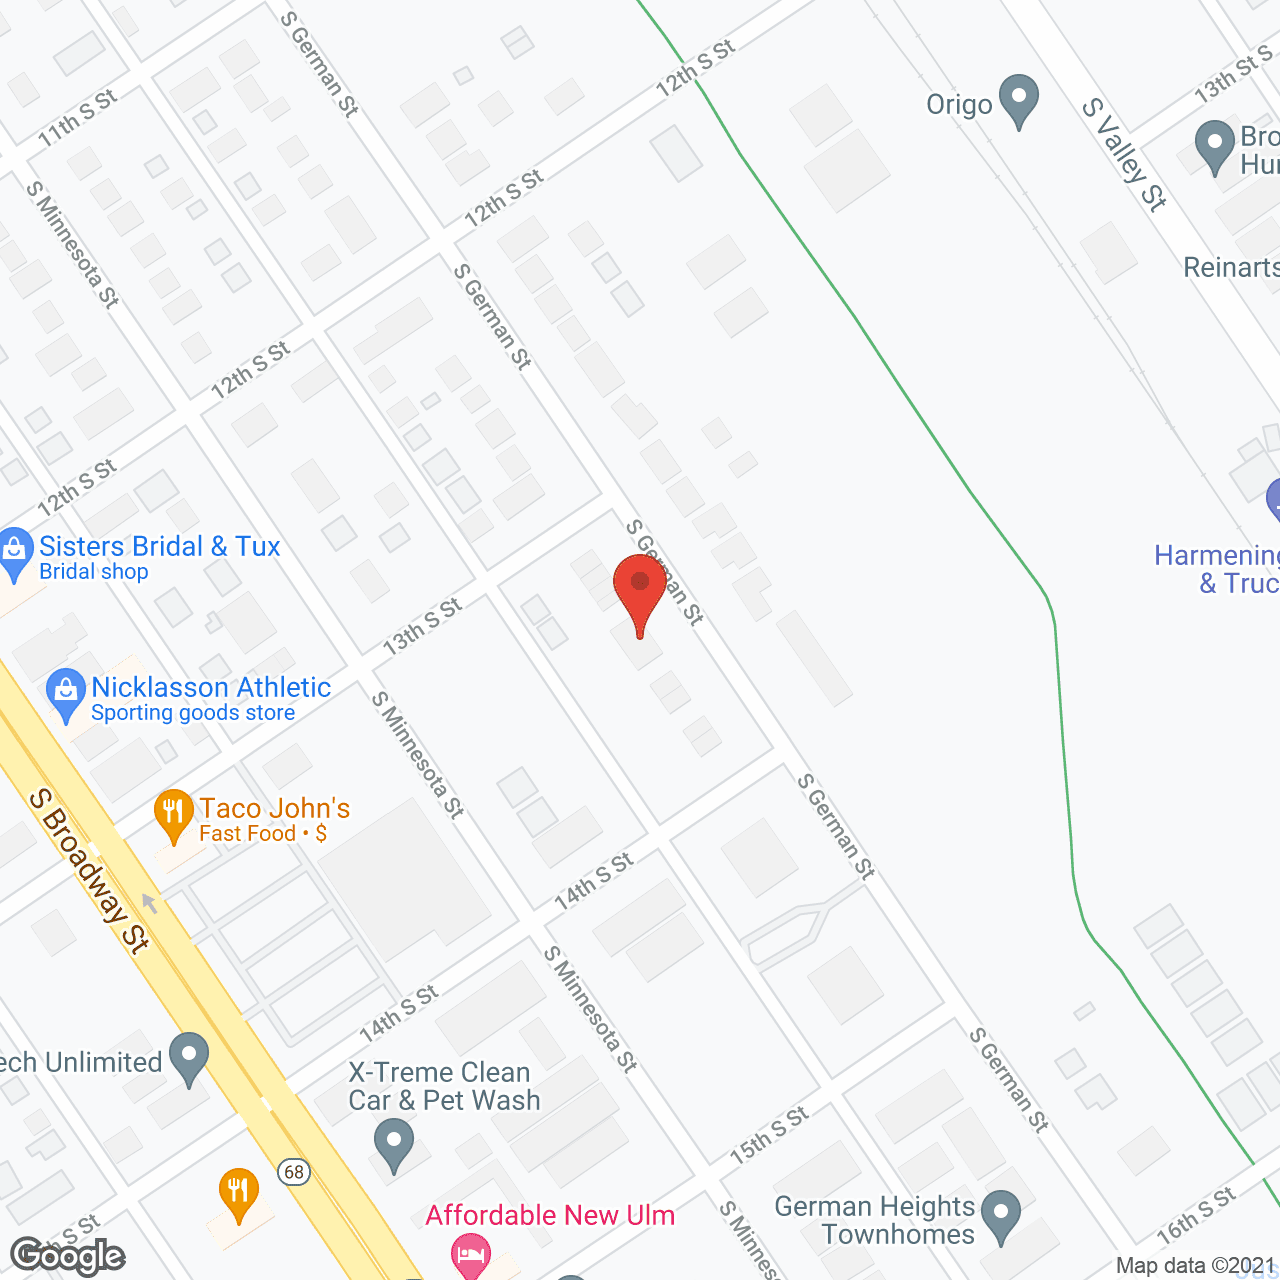 Nova House in google map